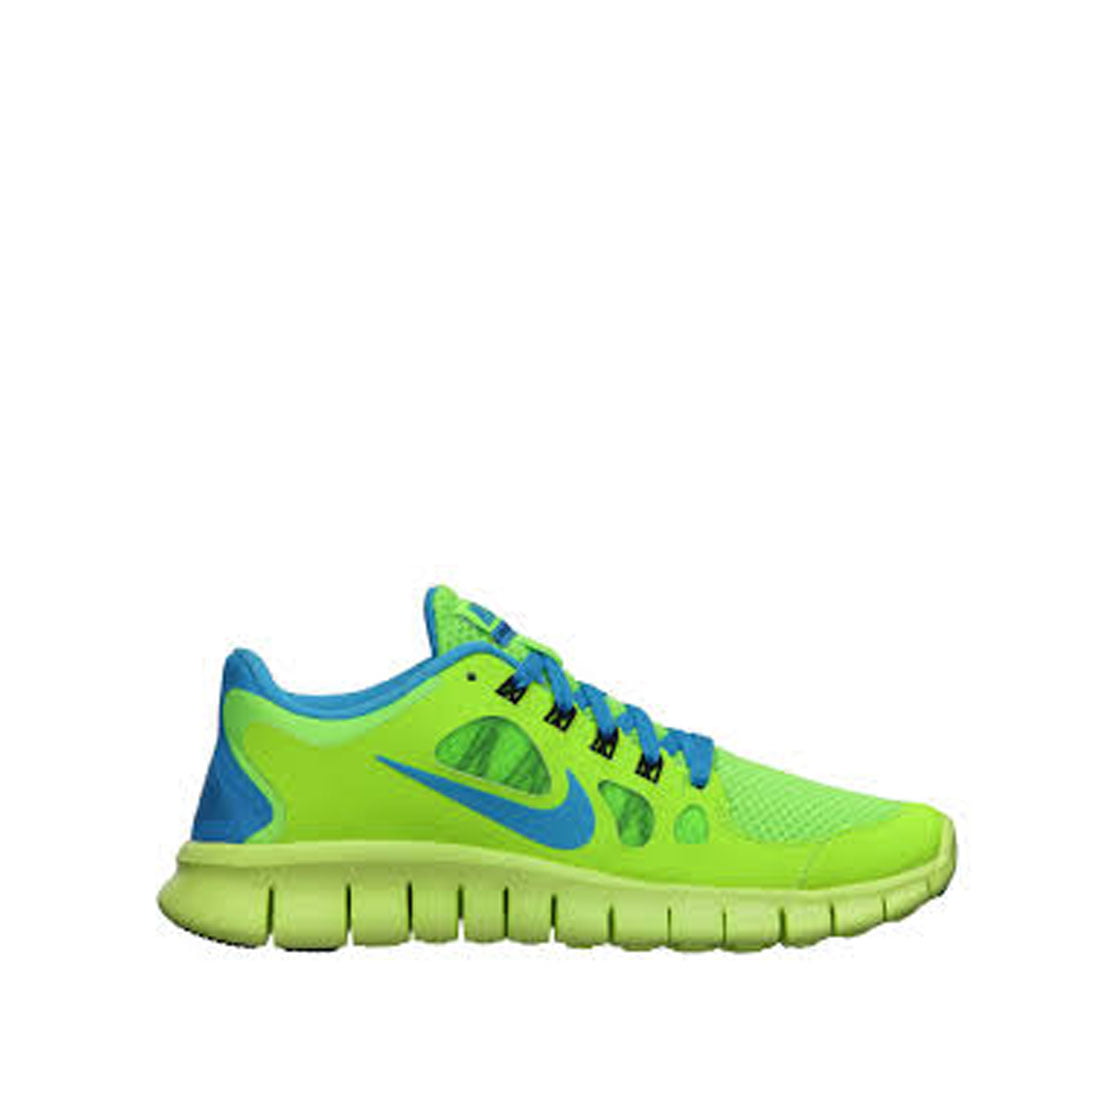 Laboratorium Archeologie Zuivelproducten Nike Free 5.0 (GS) Unisex/Adult shoe size 7 Casual 580558-300 Flash Lime/ Blue Hero-Black - Walmart.com